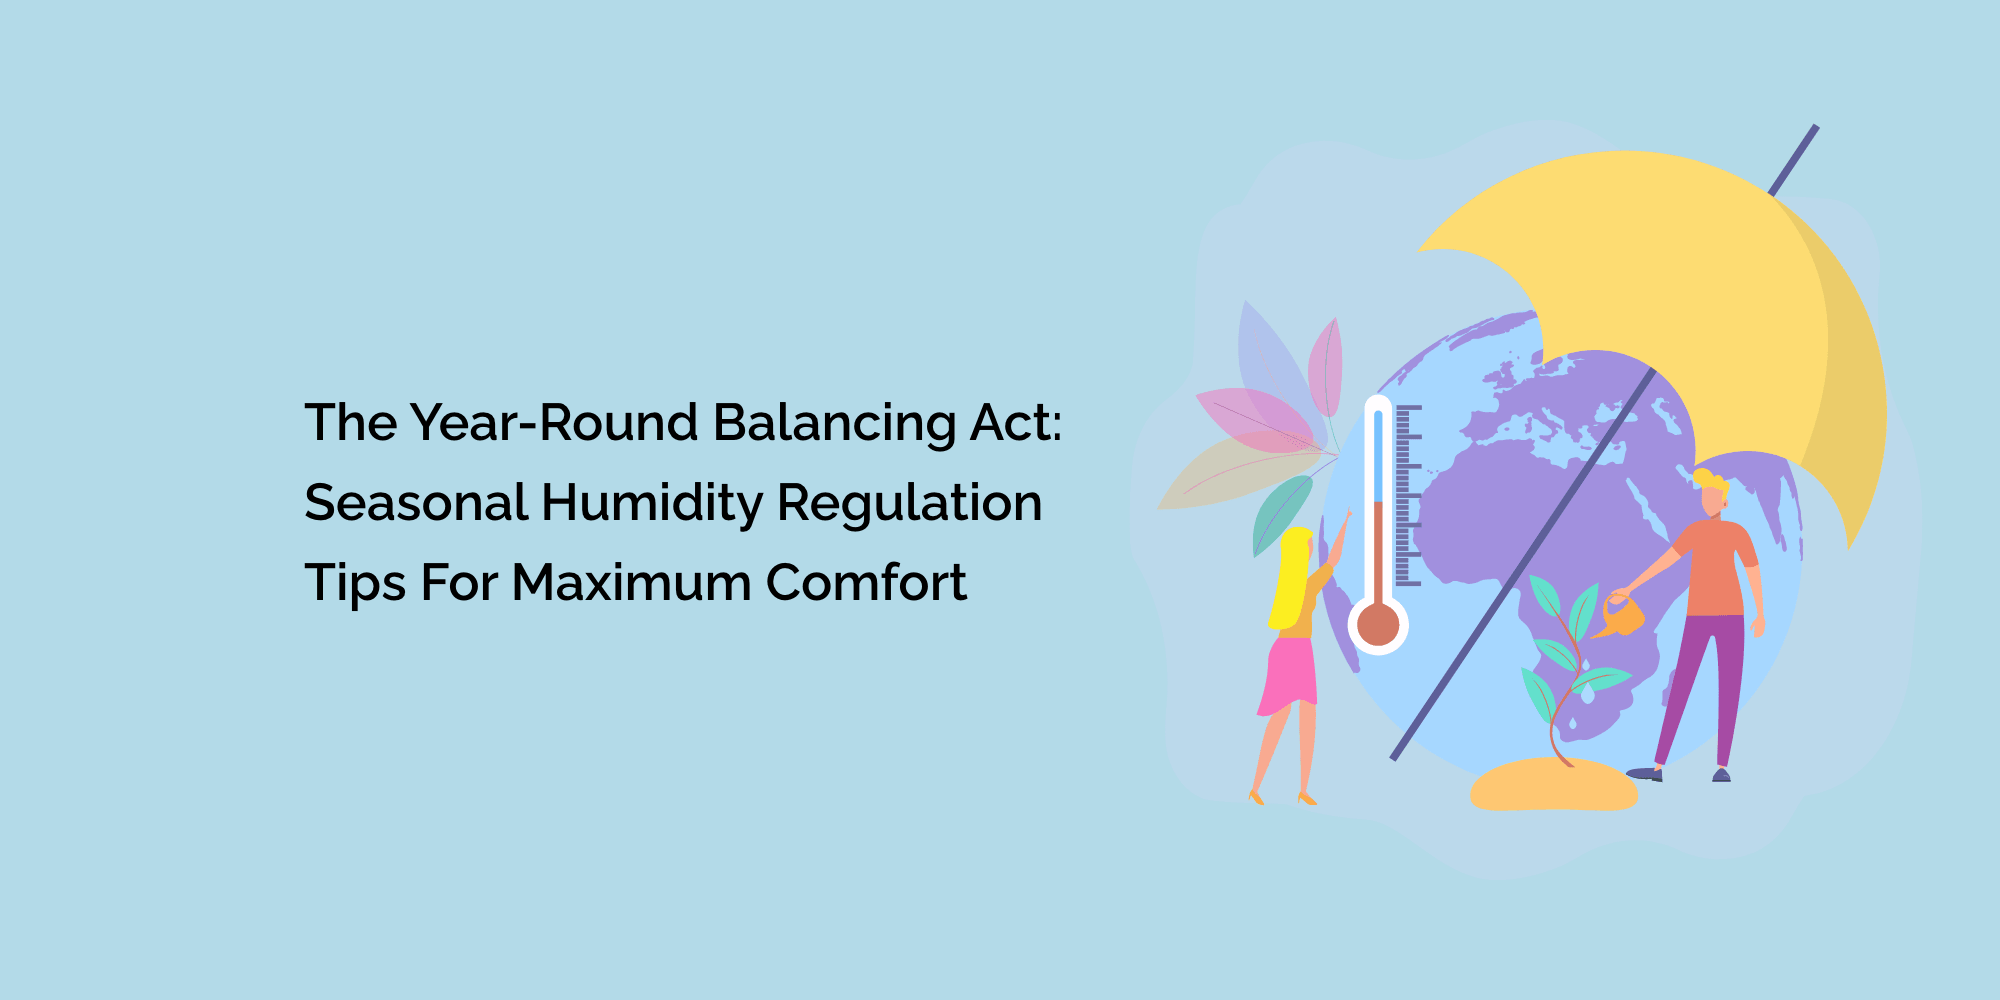 The Year-Round Balancing Act: Seasonal Humidity Regulation Tips for Maximum Comfort